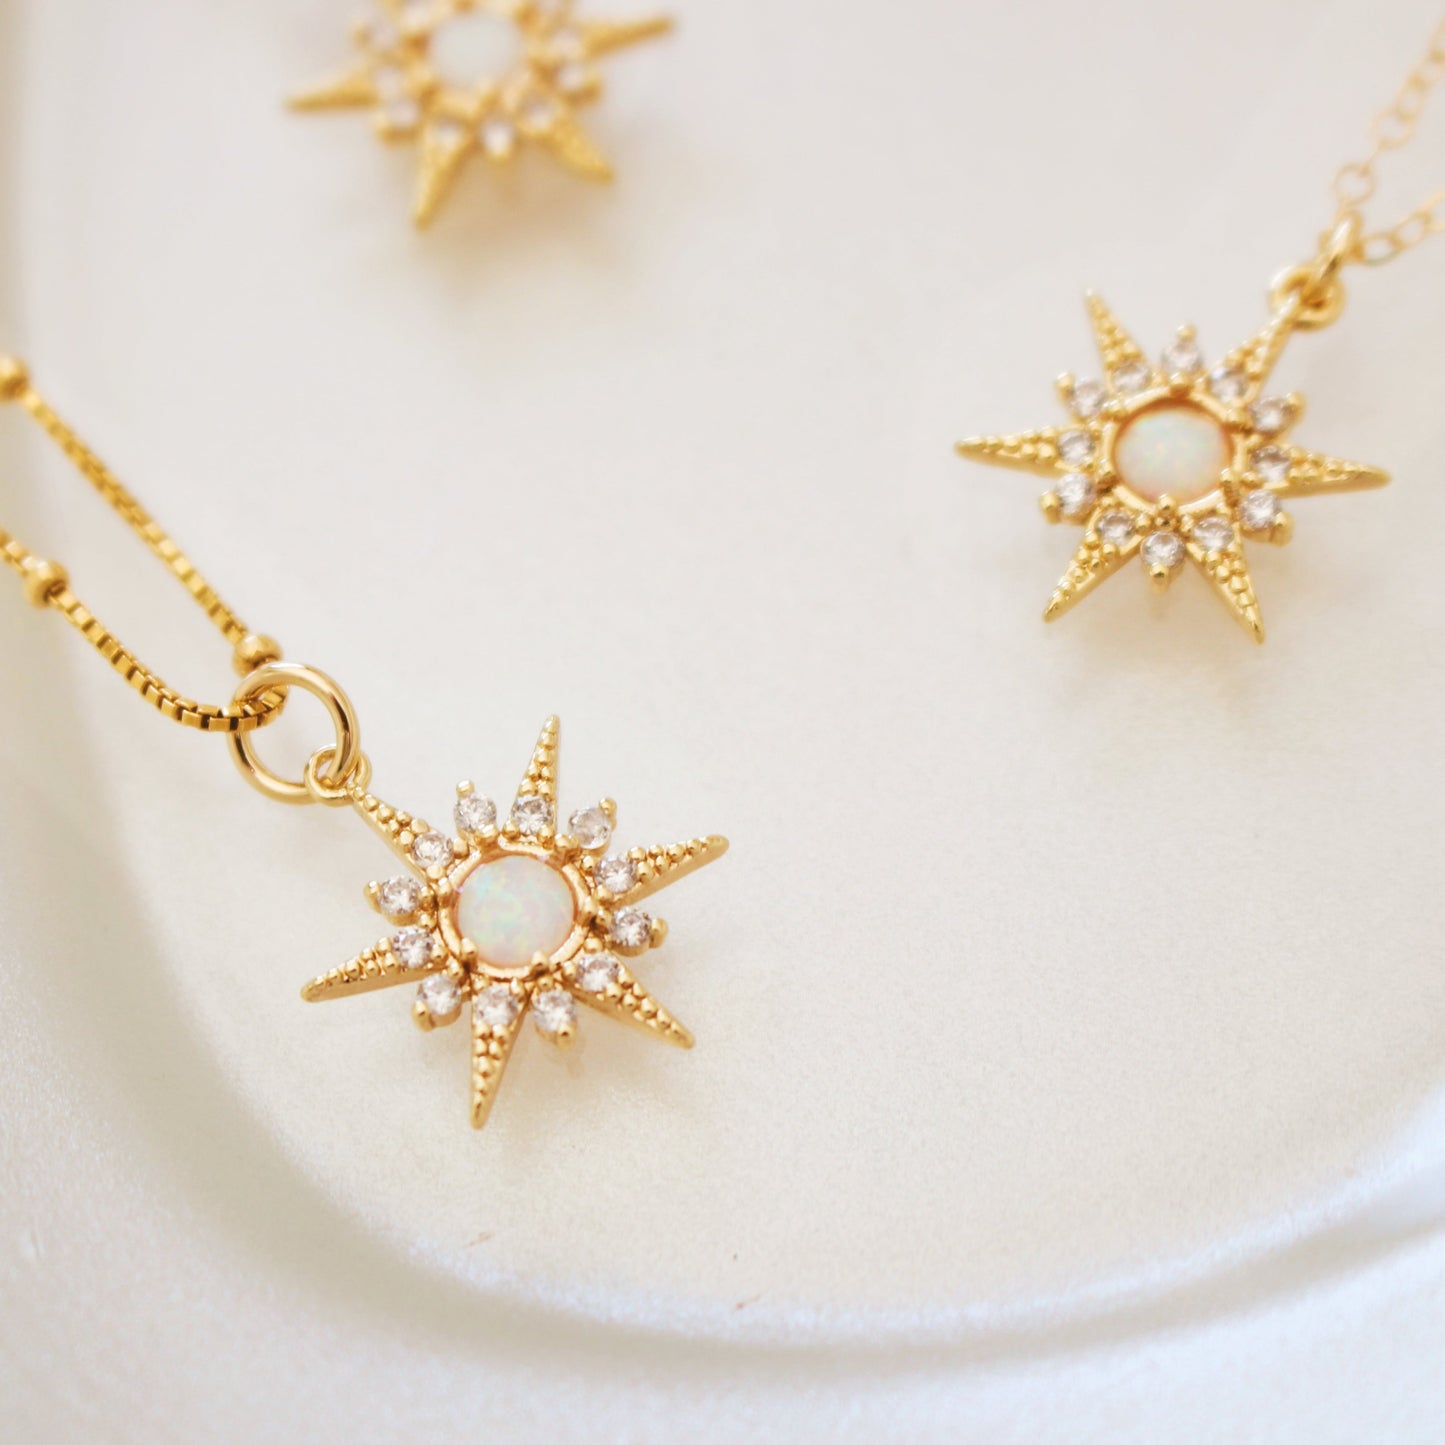 Collier d'opale céleste - Gold Filled Micro Pave Opal Star Necklace